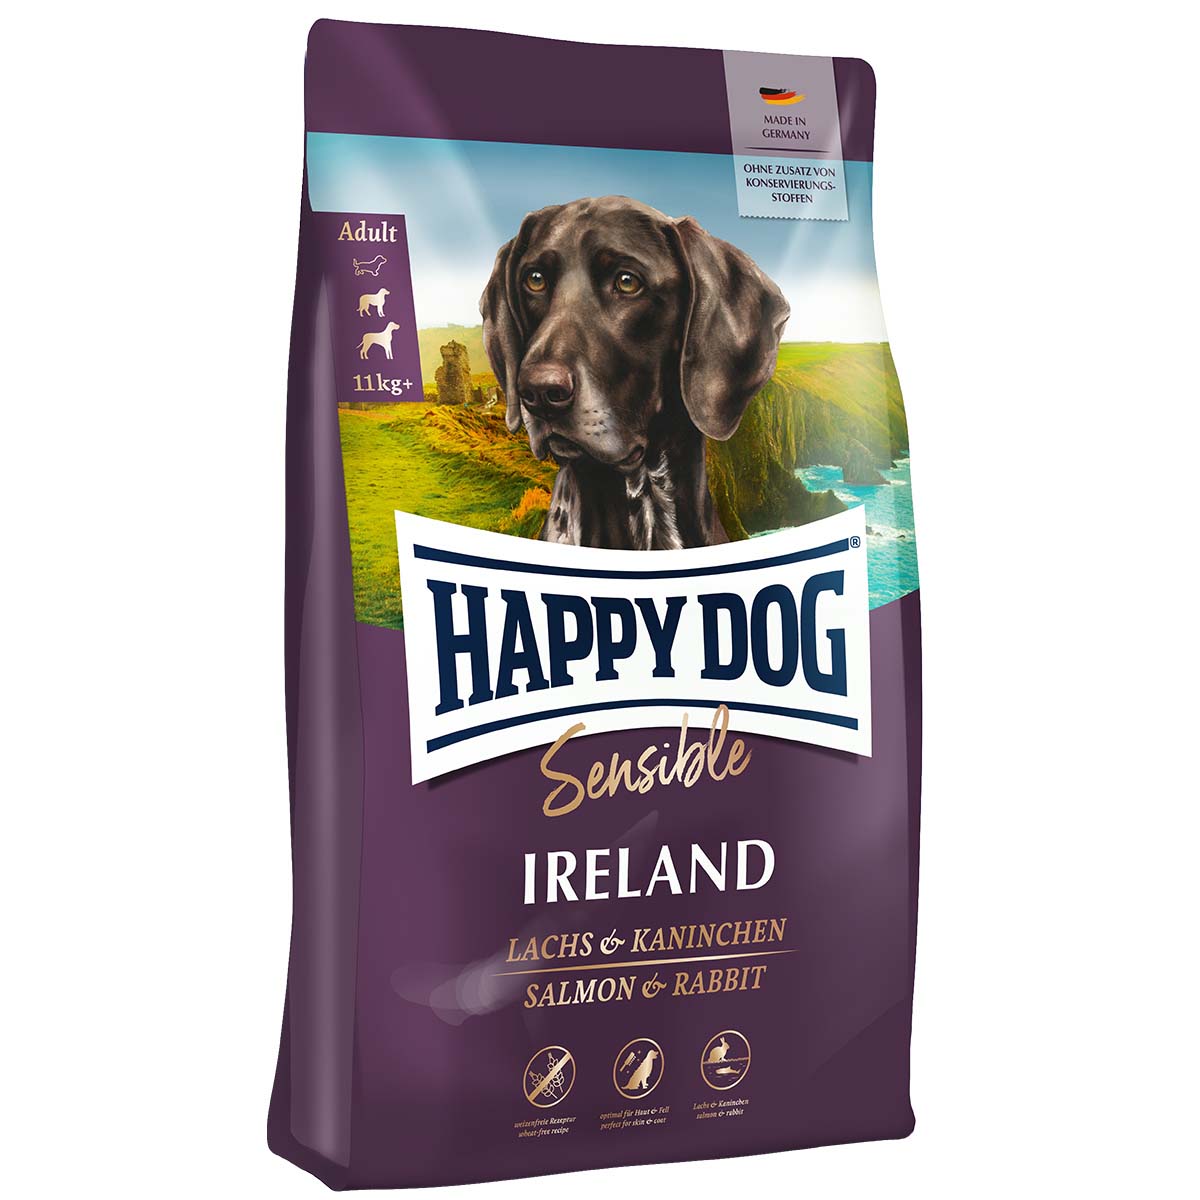 Happy Dog Supreme Sensible Ireland 2x12